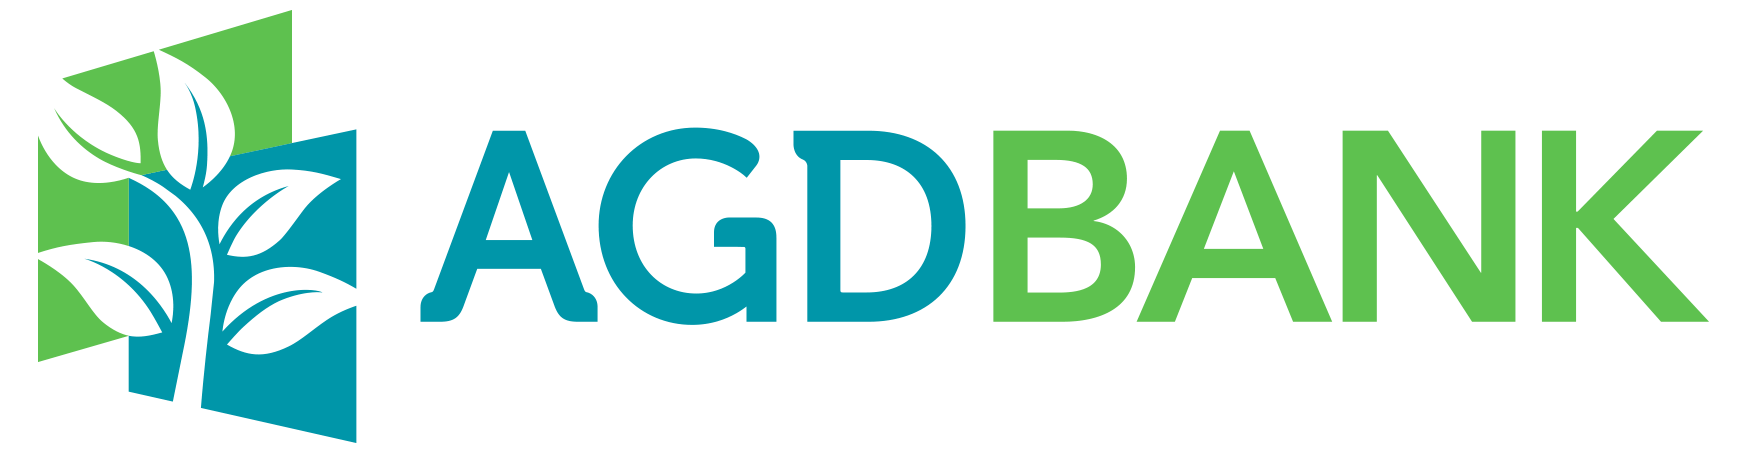 Green Bank Logo - FocusCore finds synergy with Asia Green Development Bank | FocusCore ...